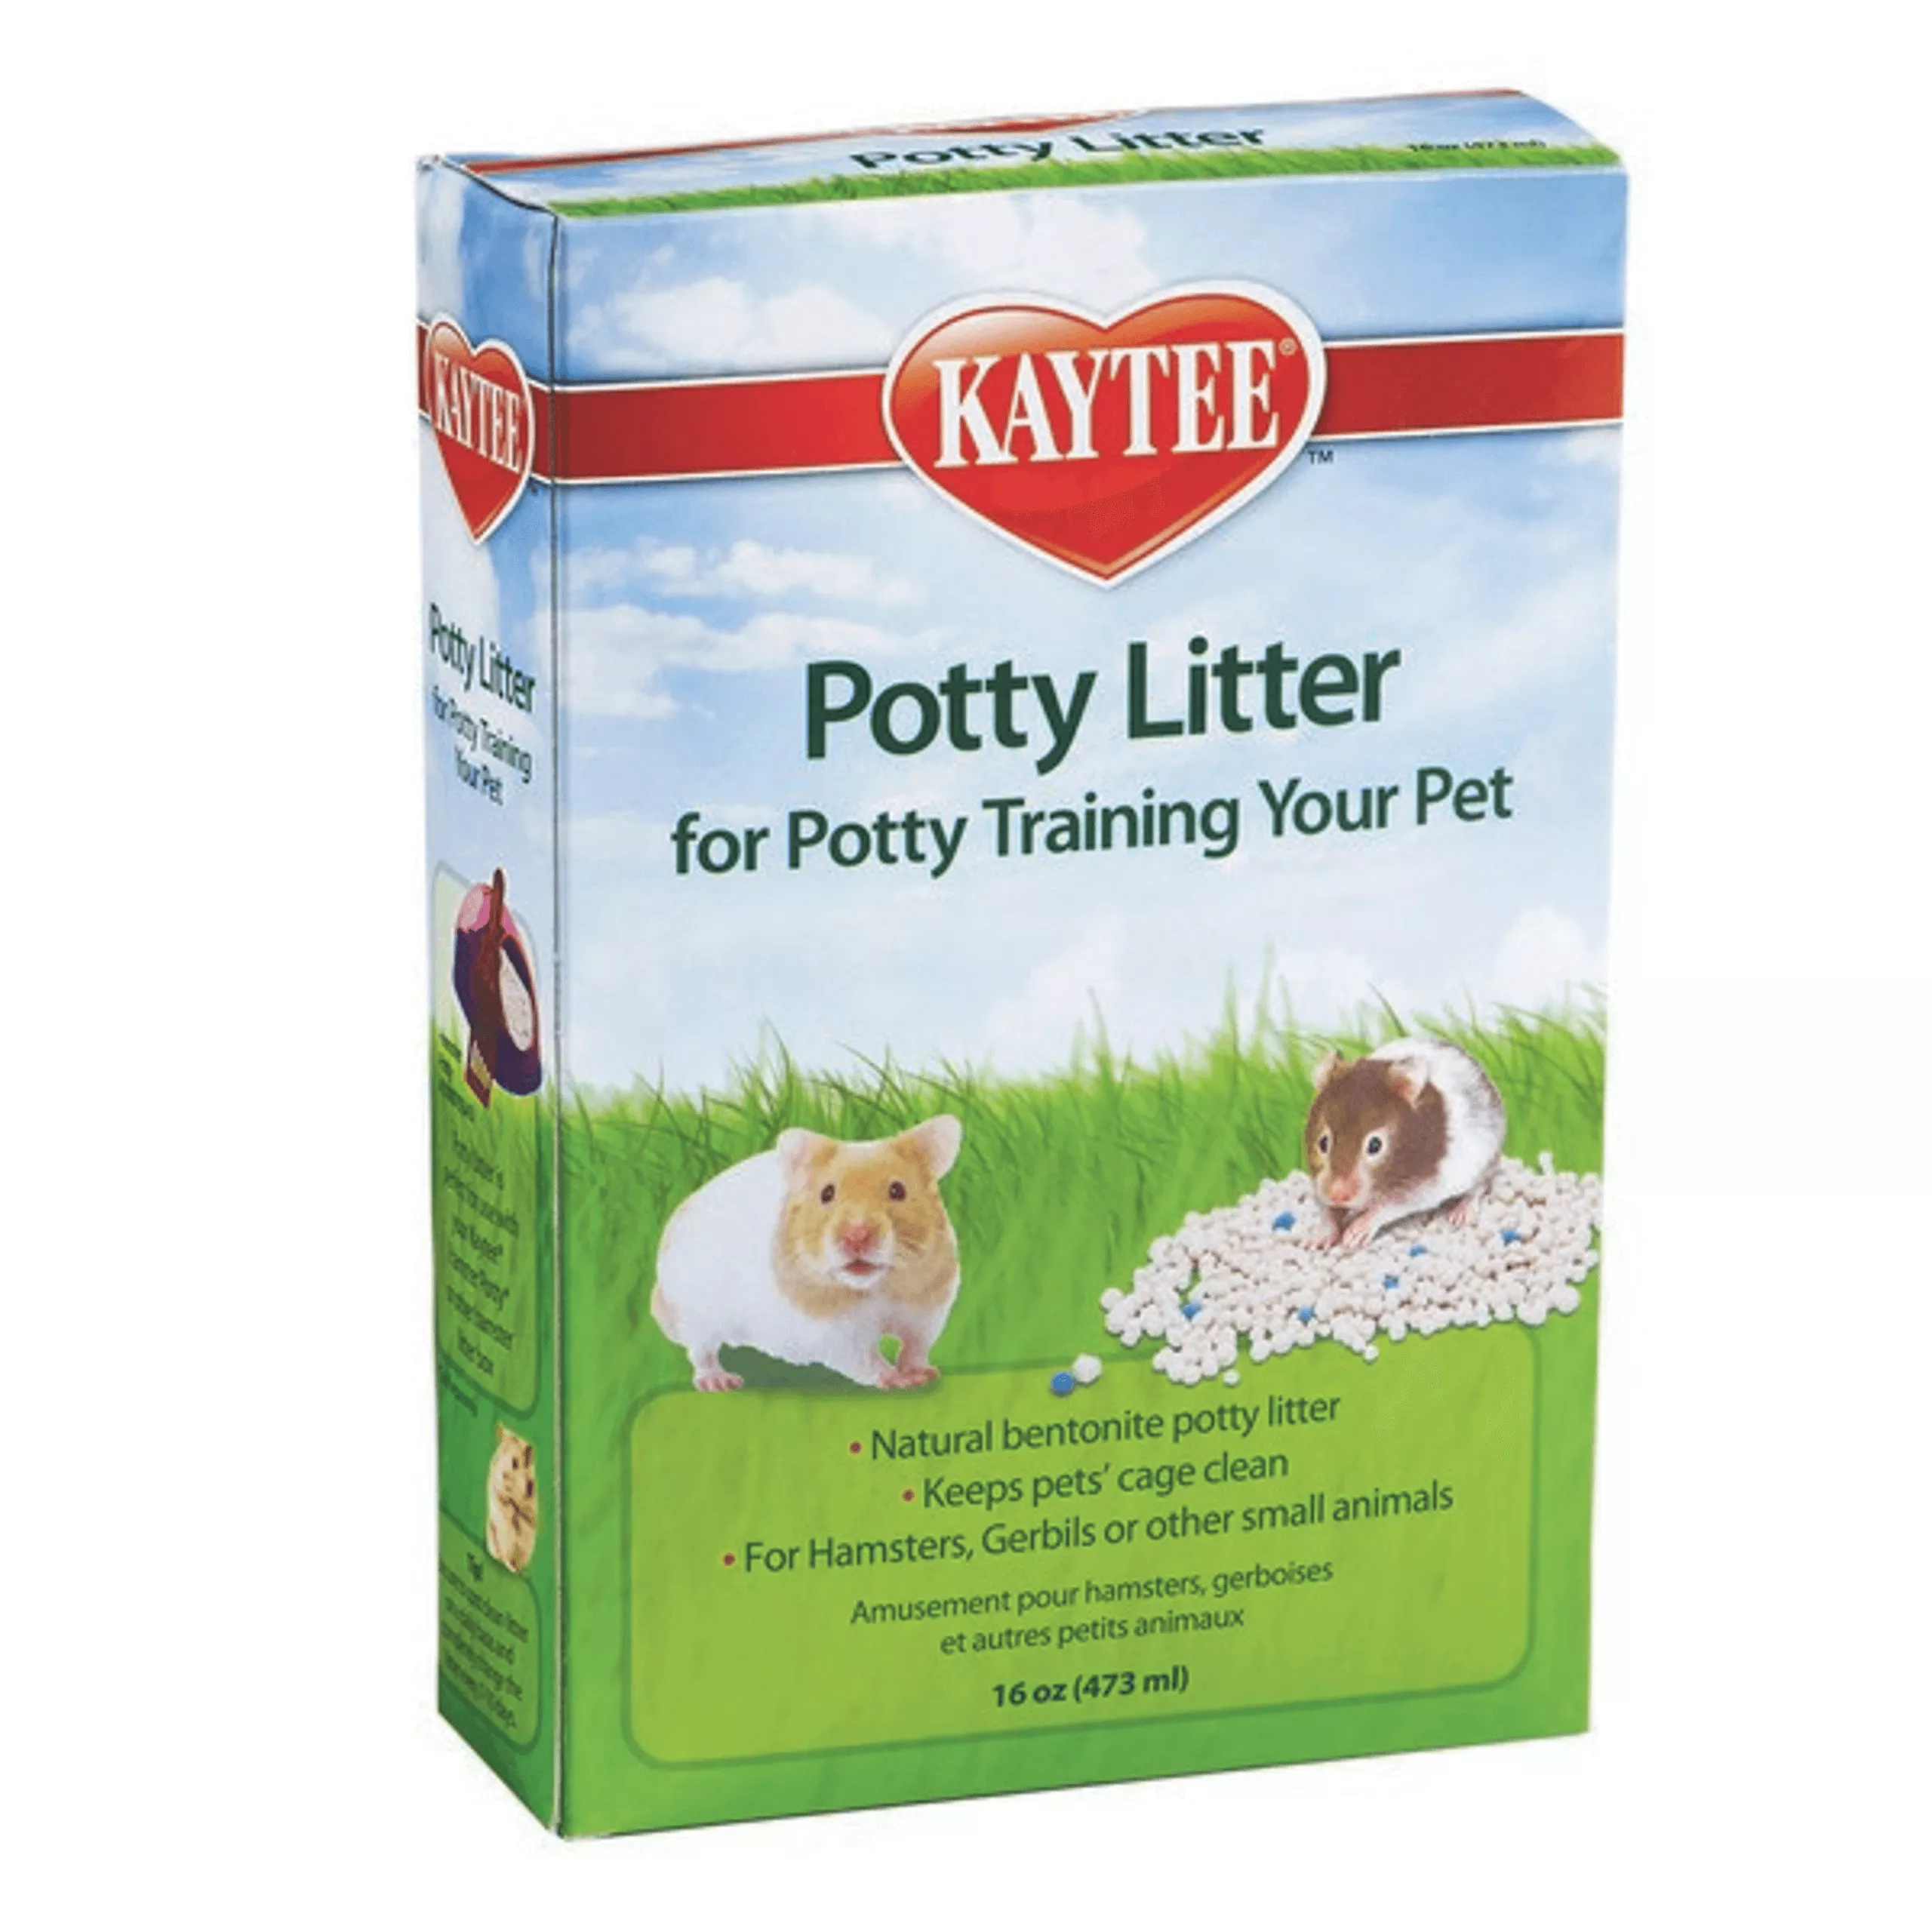 Potty Litter